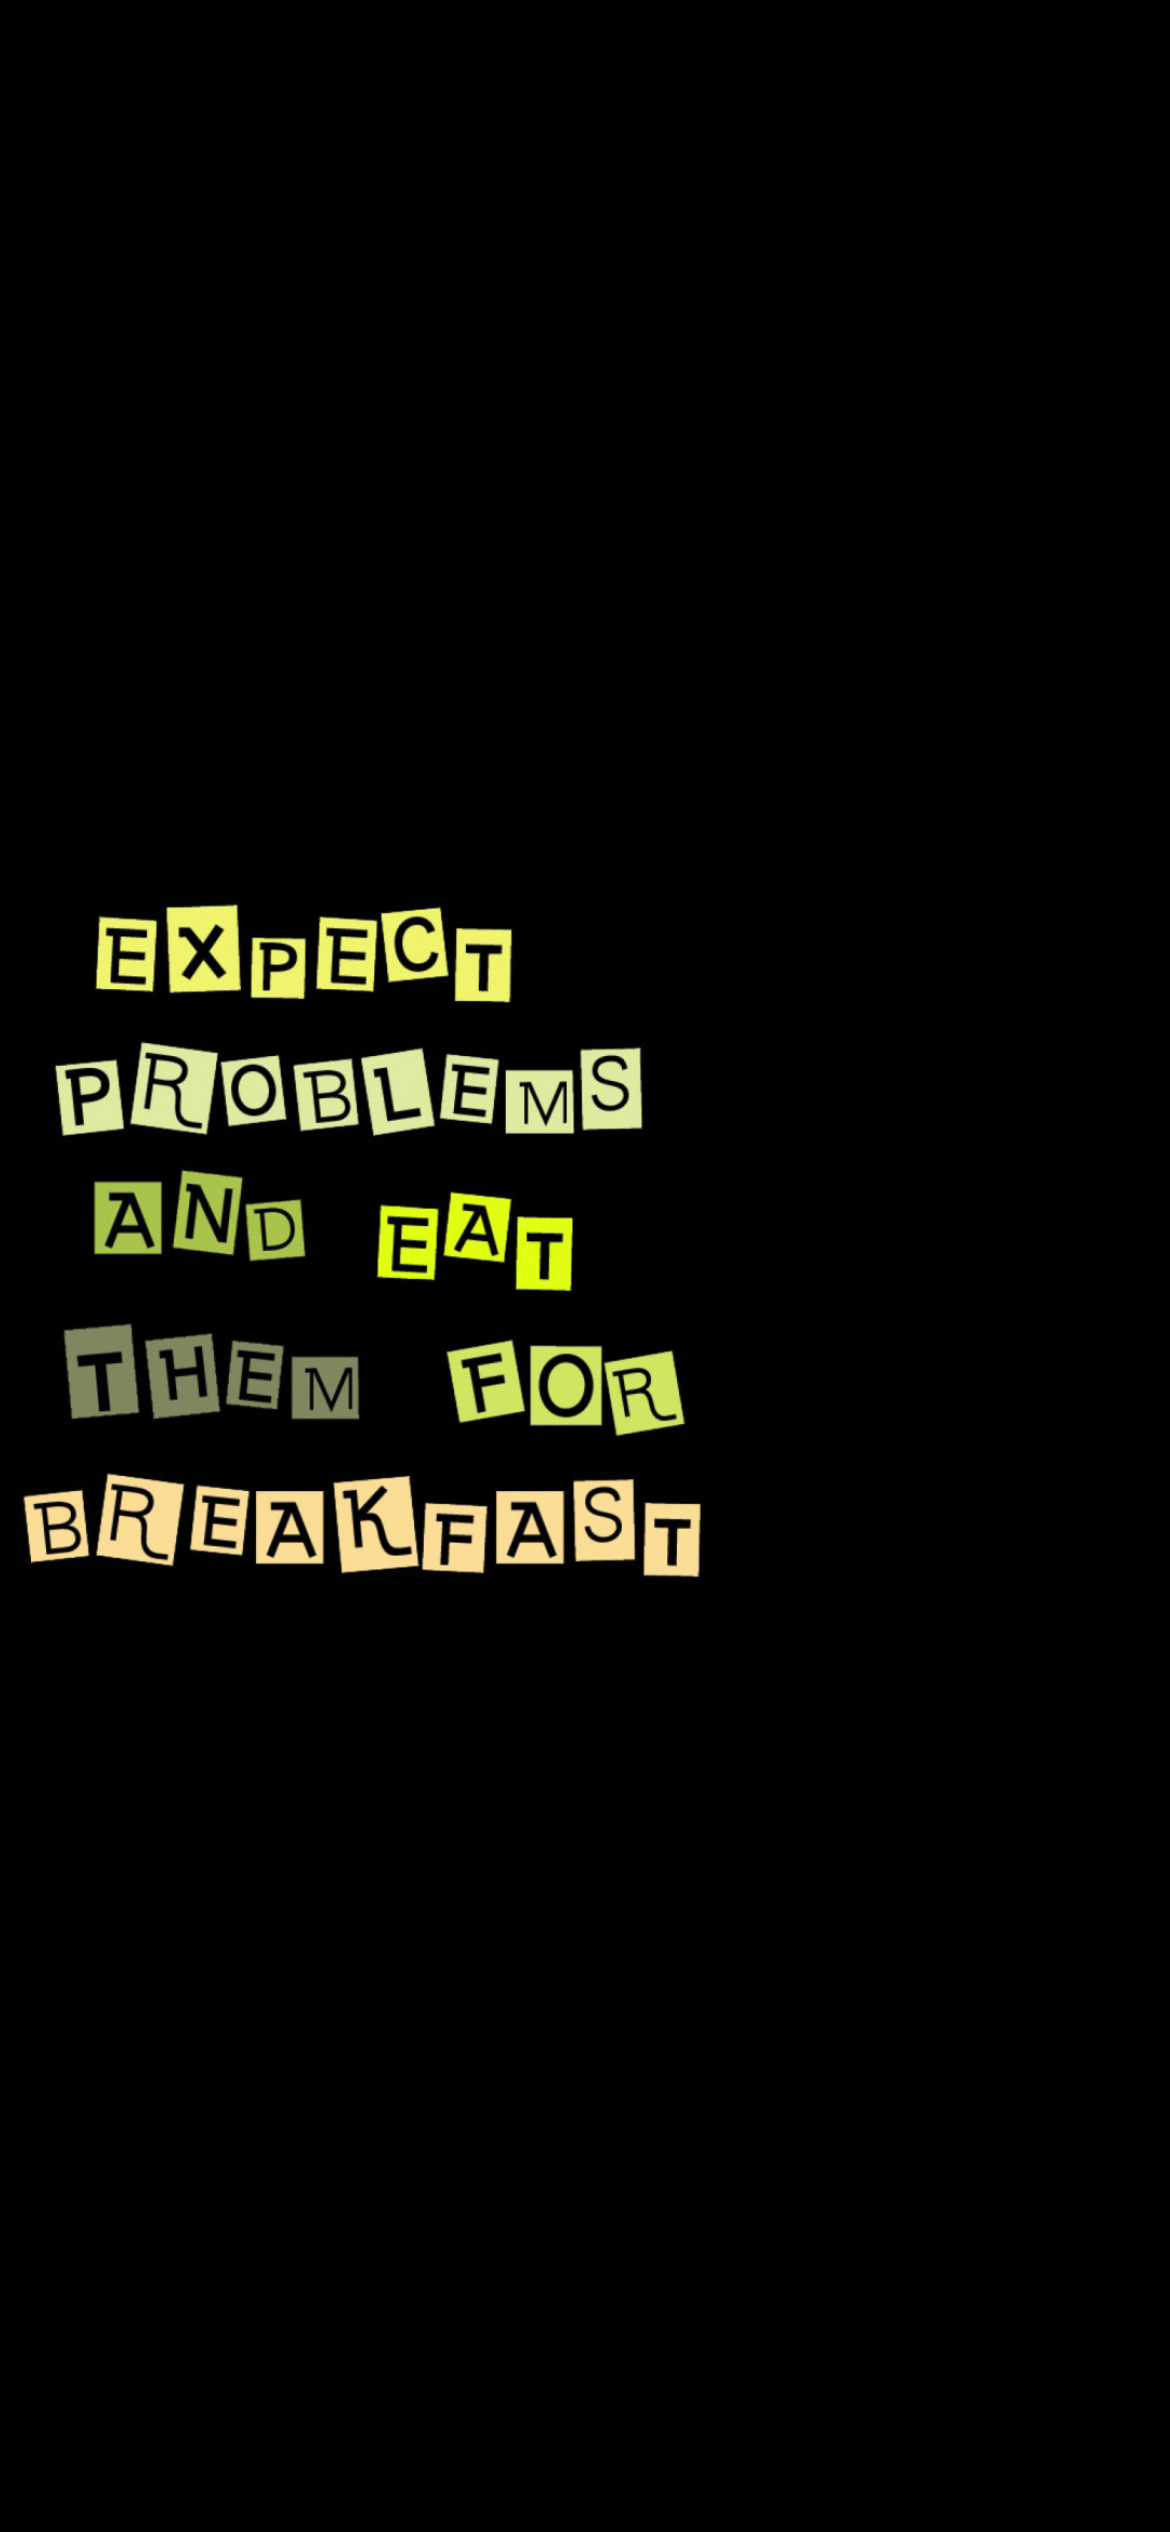 Das Problems For Breakfast Wallpaper 1170x2532